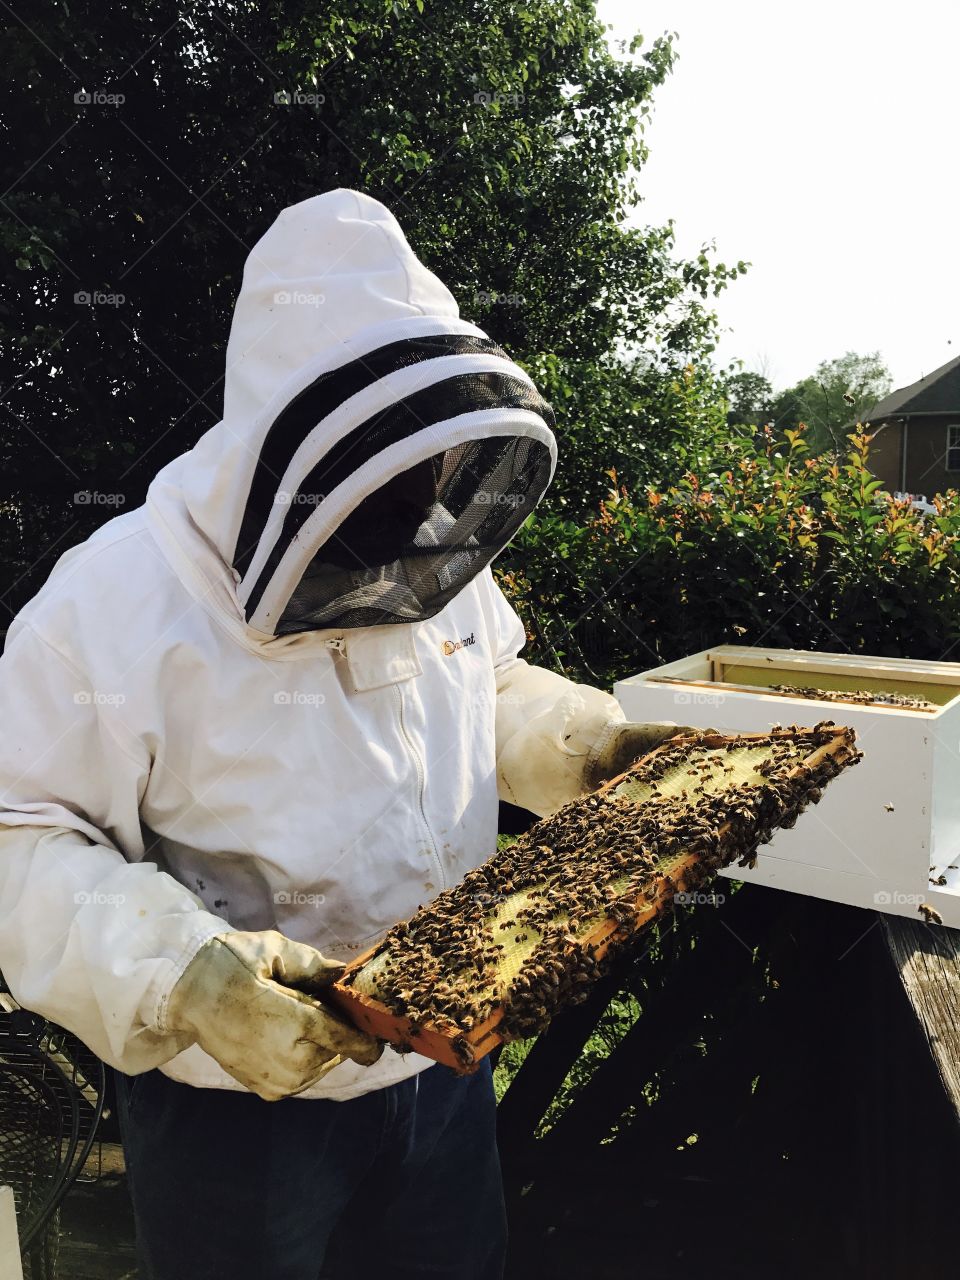 Beekeeper's work